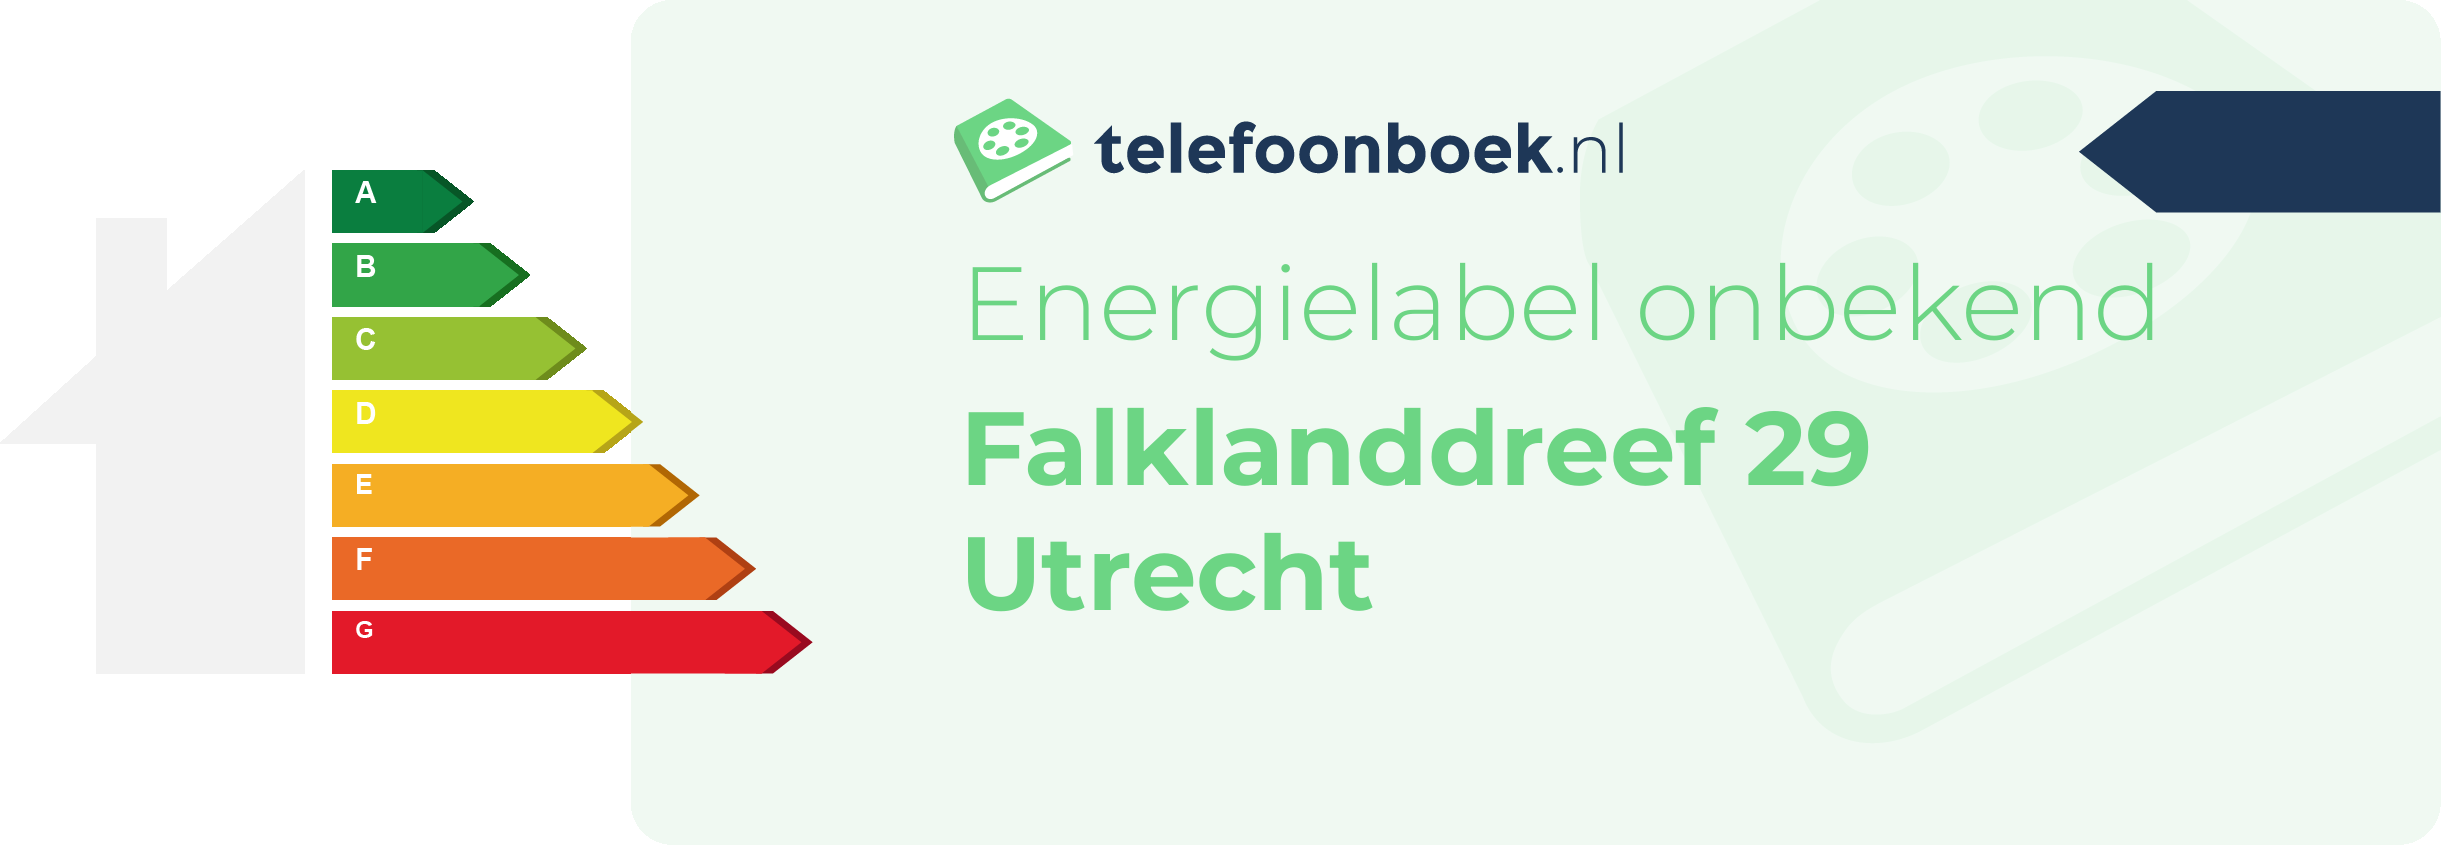 Energielabel Falklanddreef 29 Utrecht